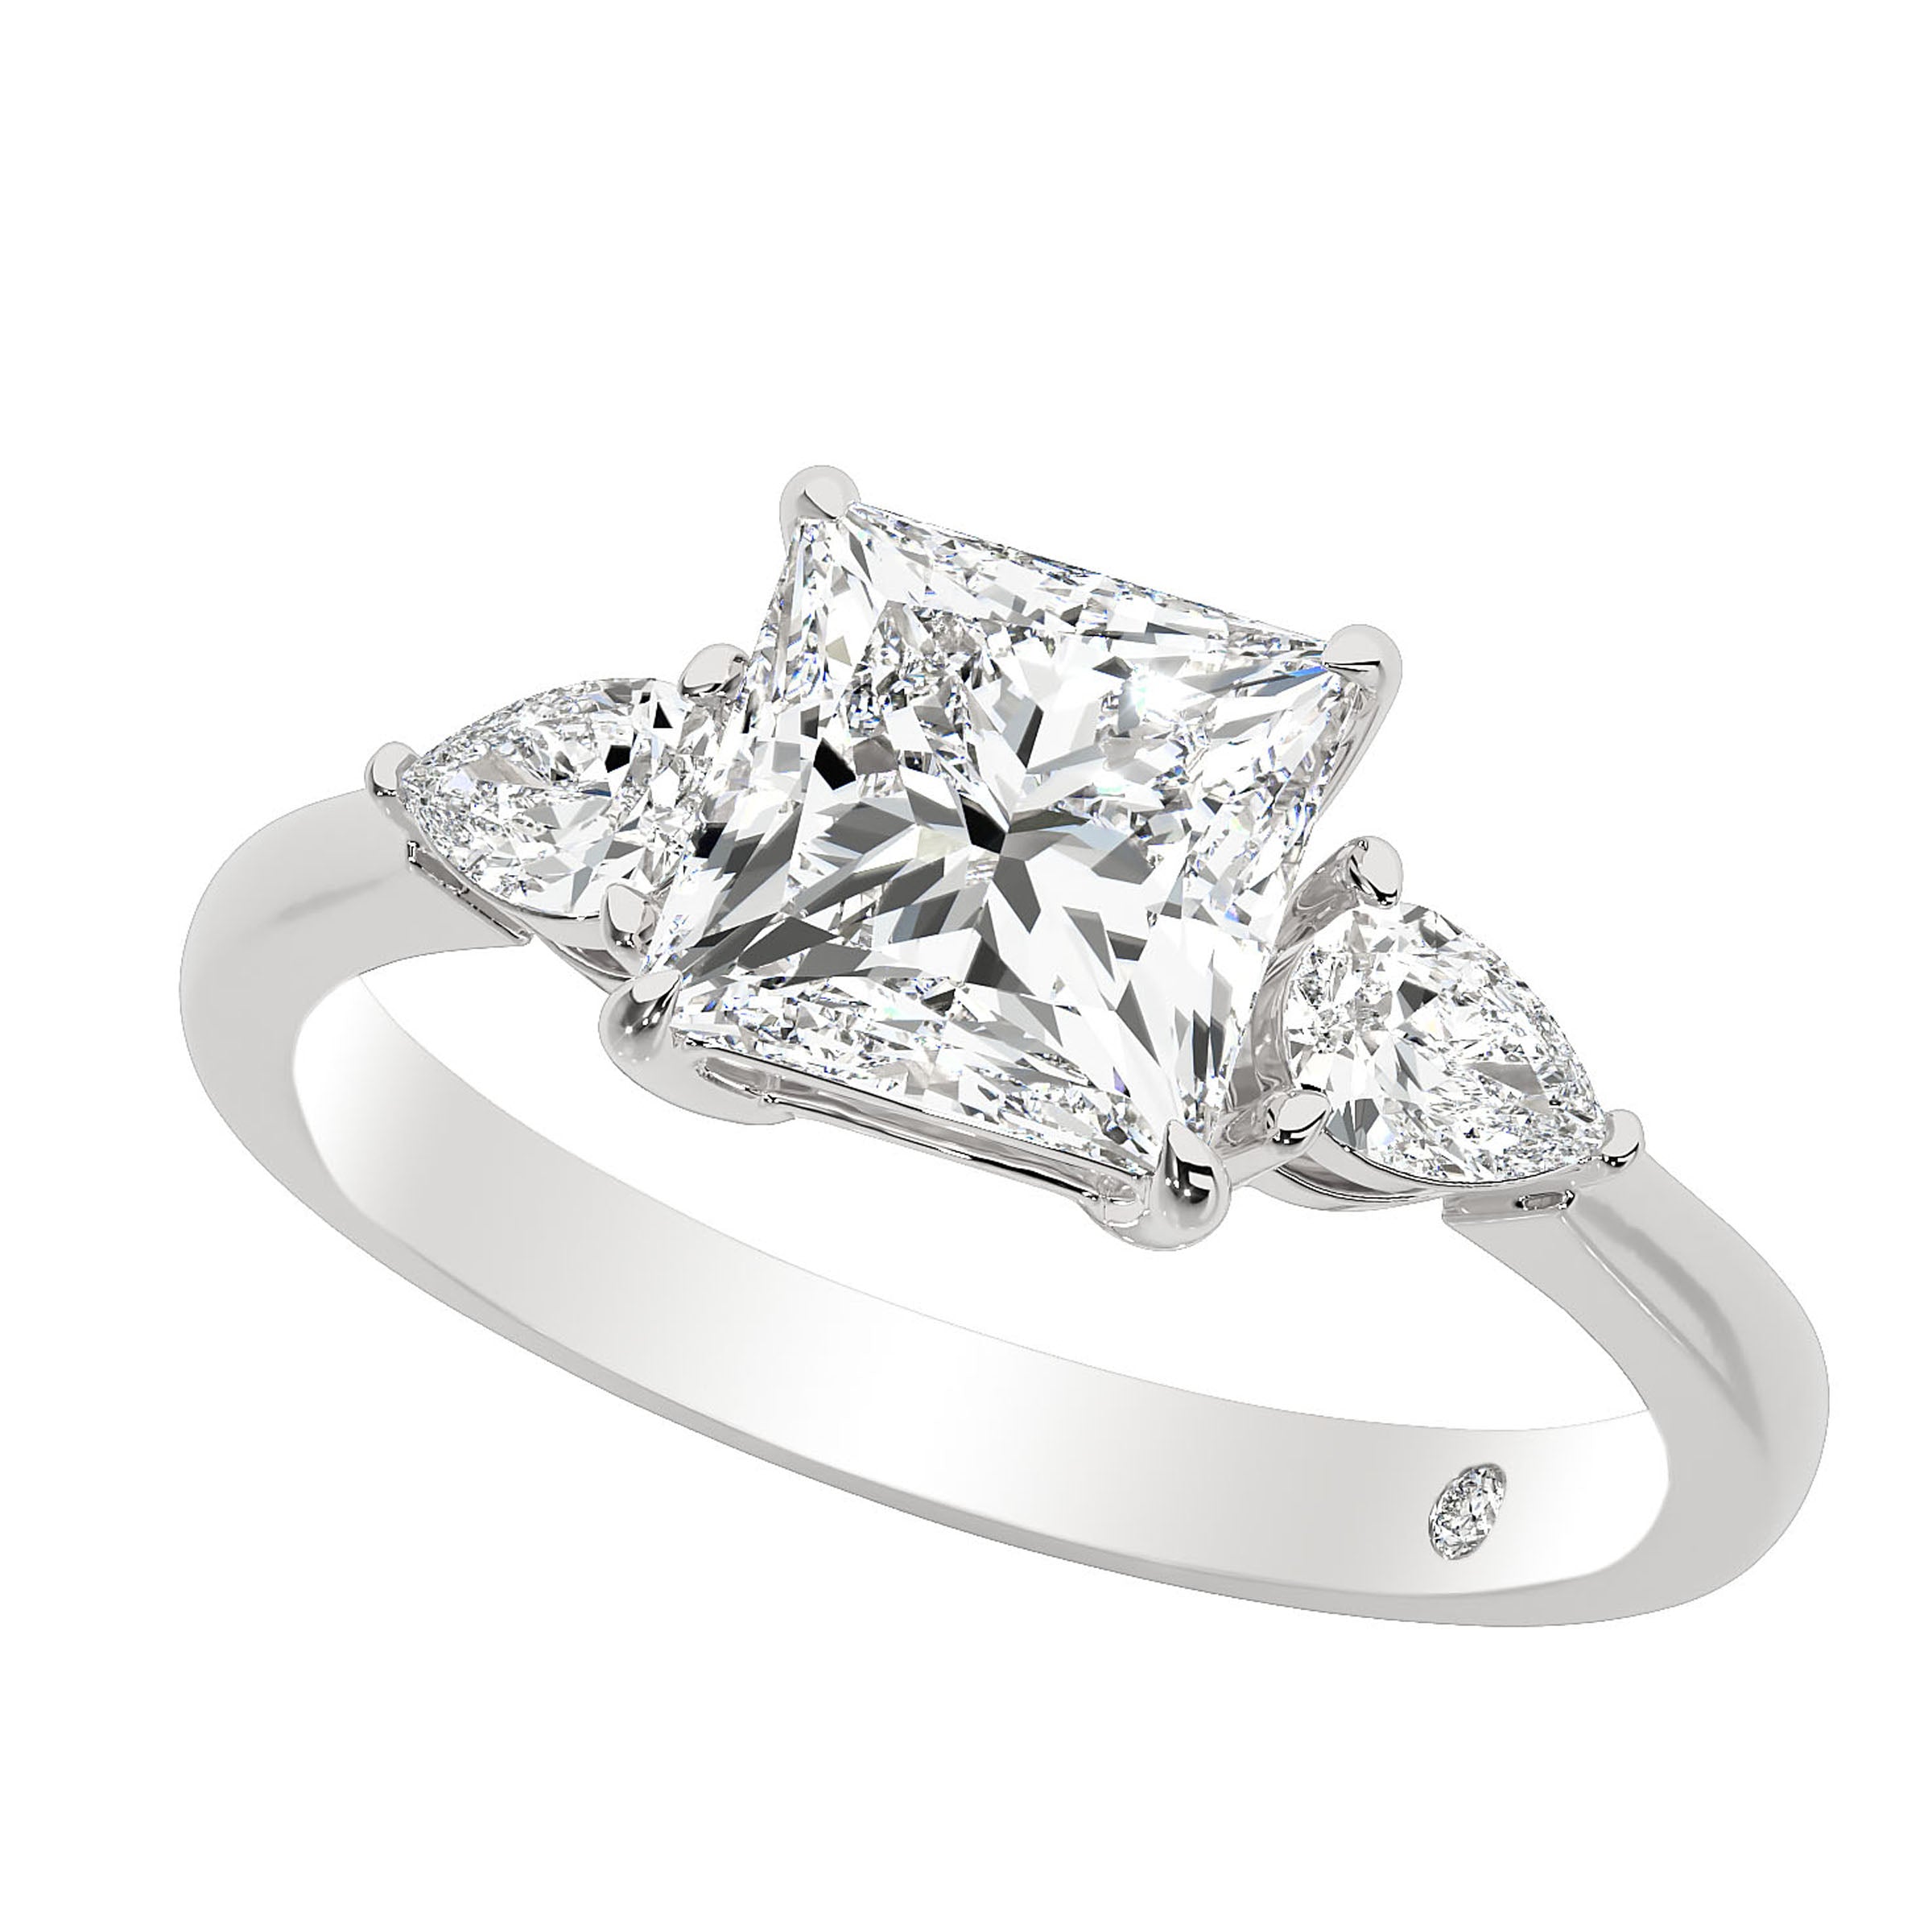 Michelle Princess Engagement Ring